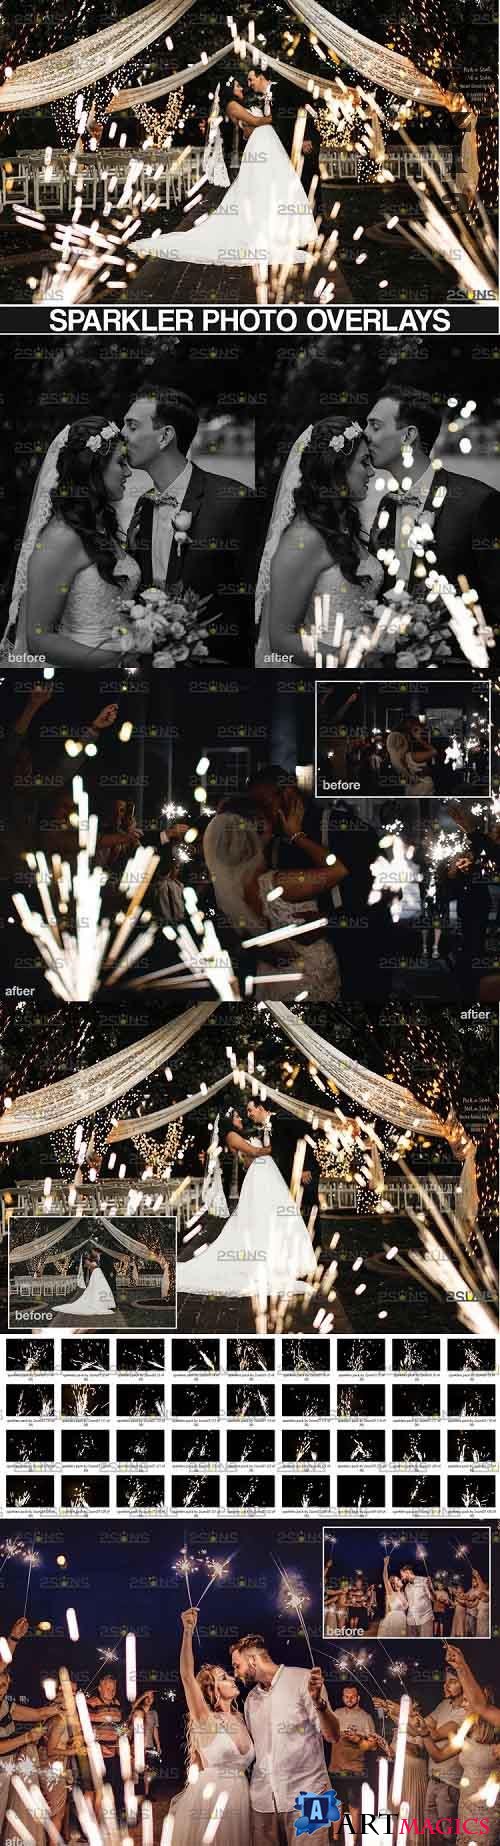 Wedding sparkler overlays Photoshop overlay - 995013